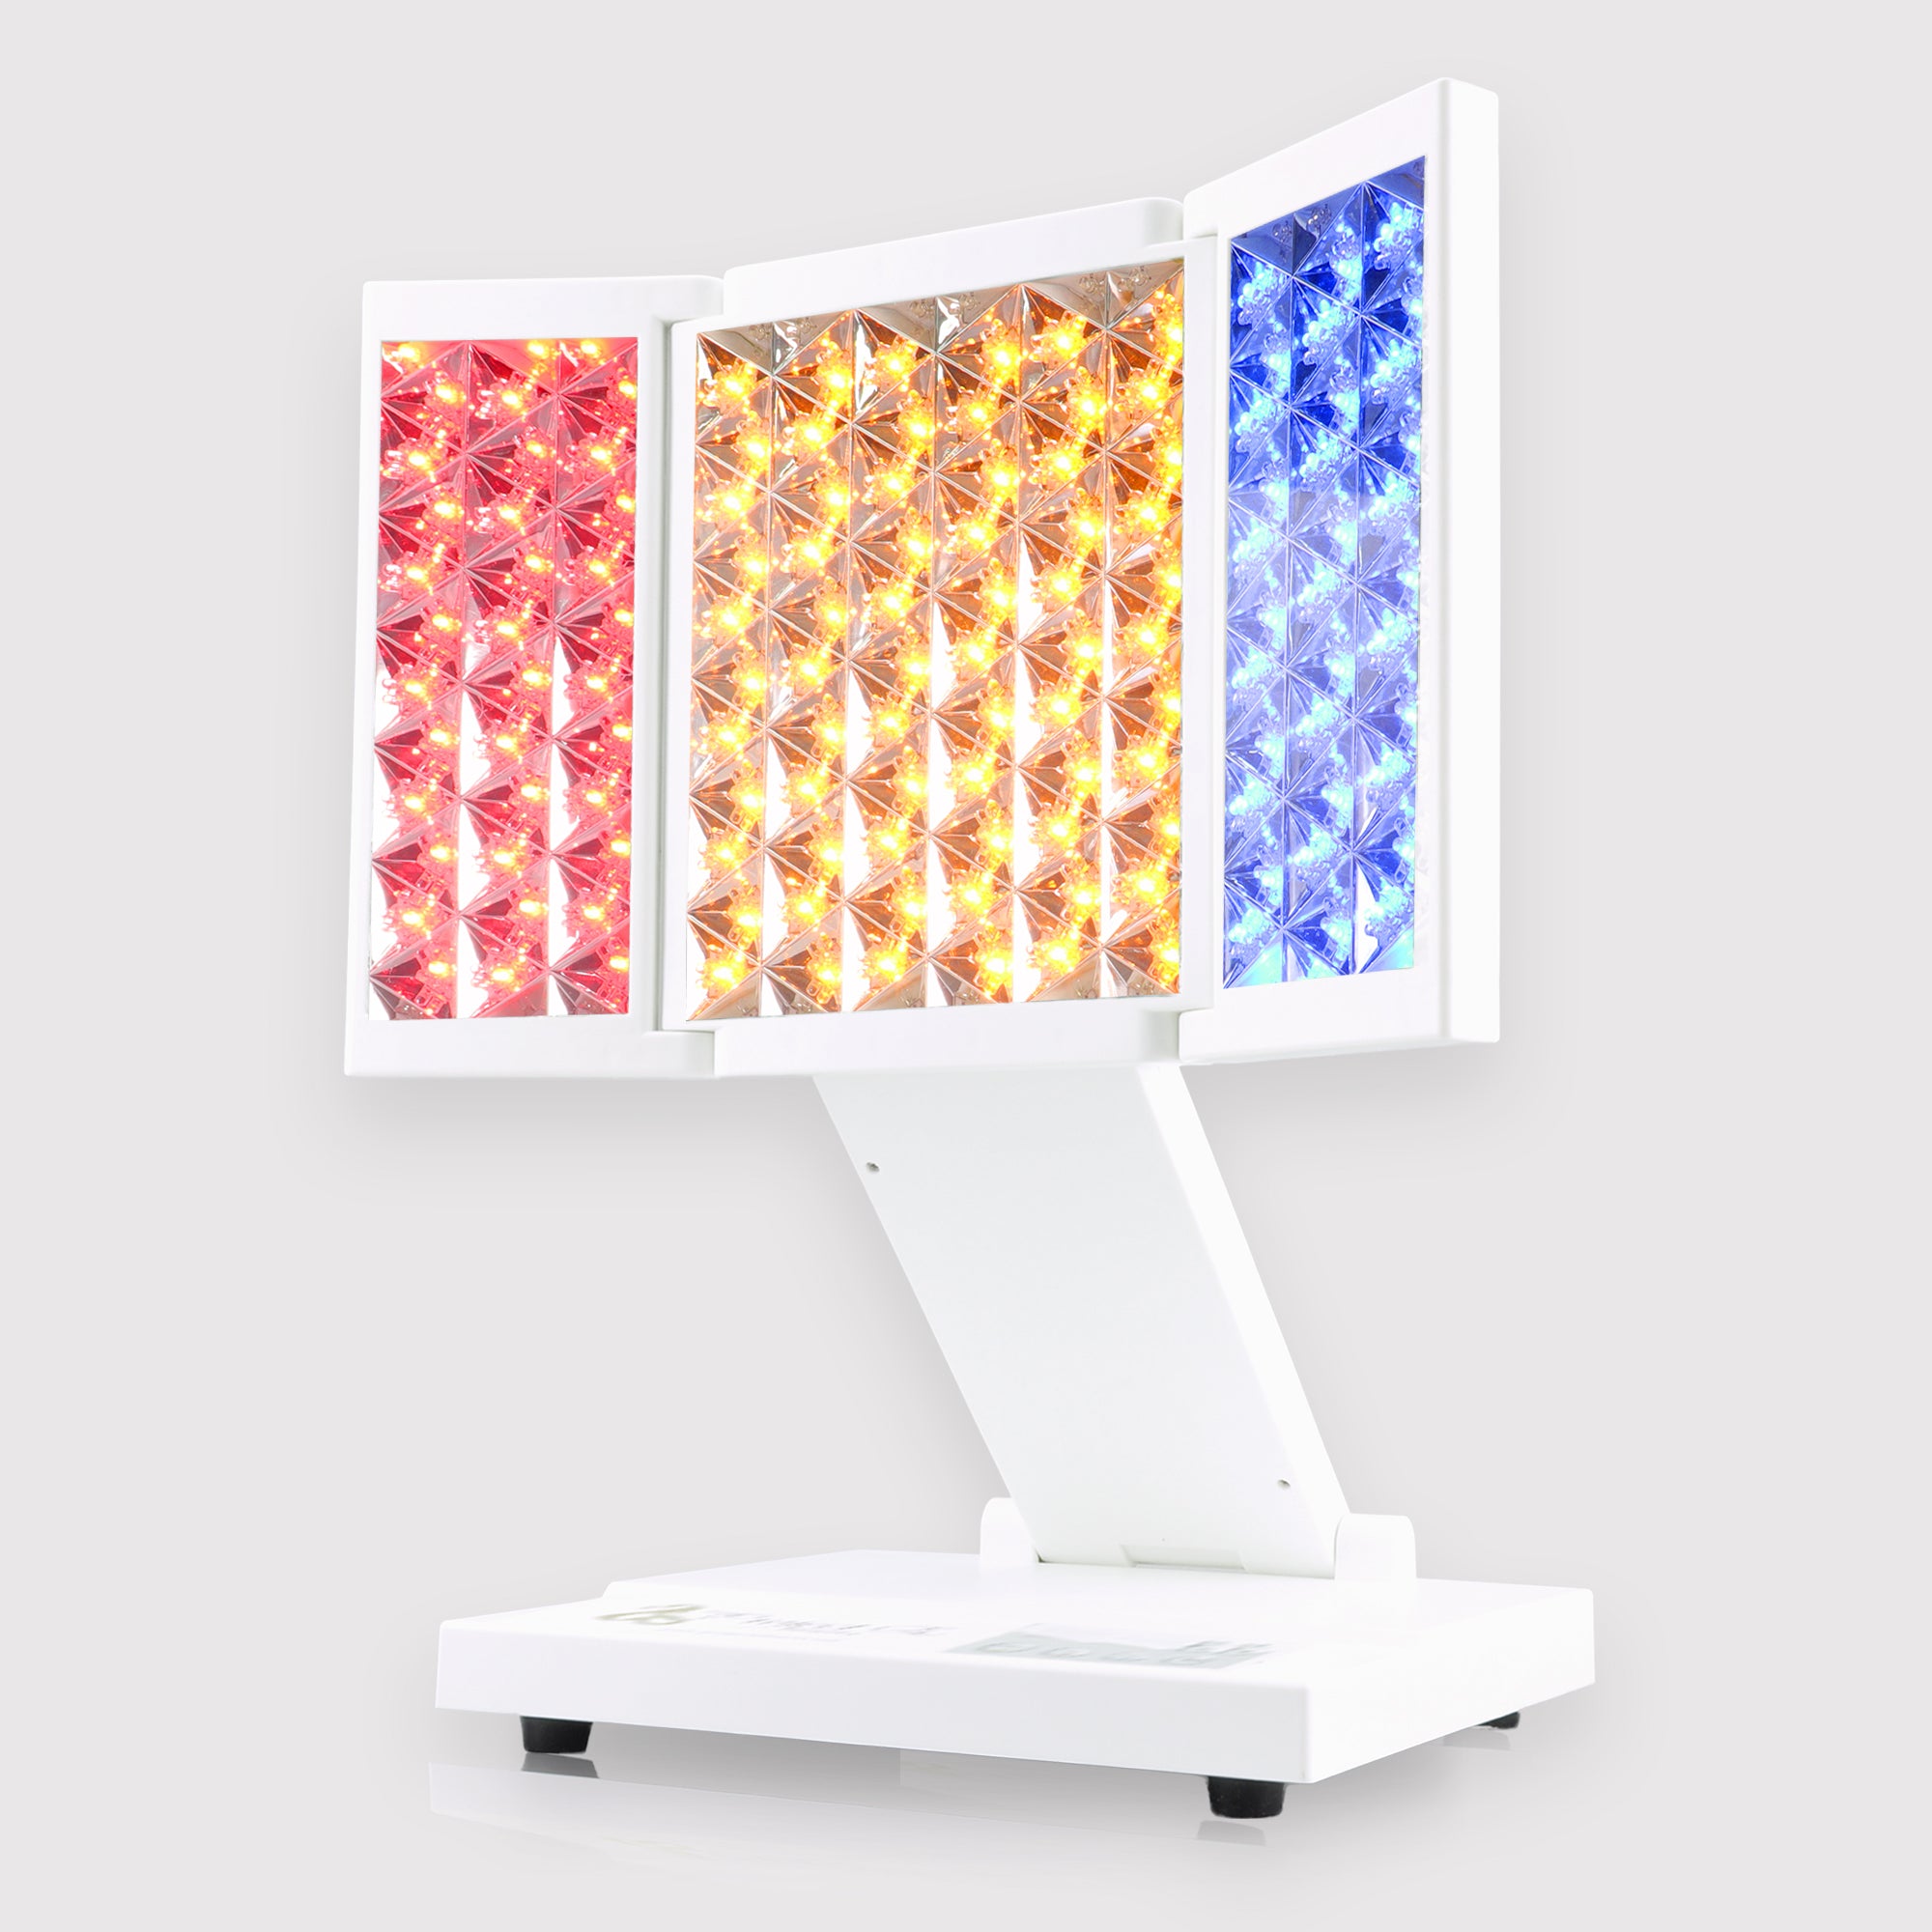 LumaPro | Tricolor LED Light Therapy Panel - Project E Beauty